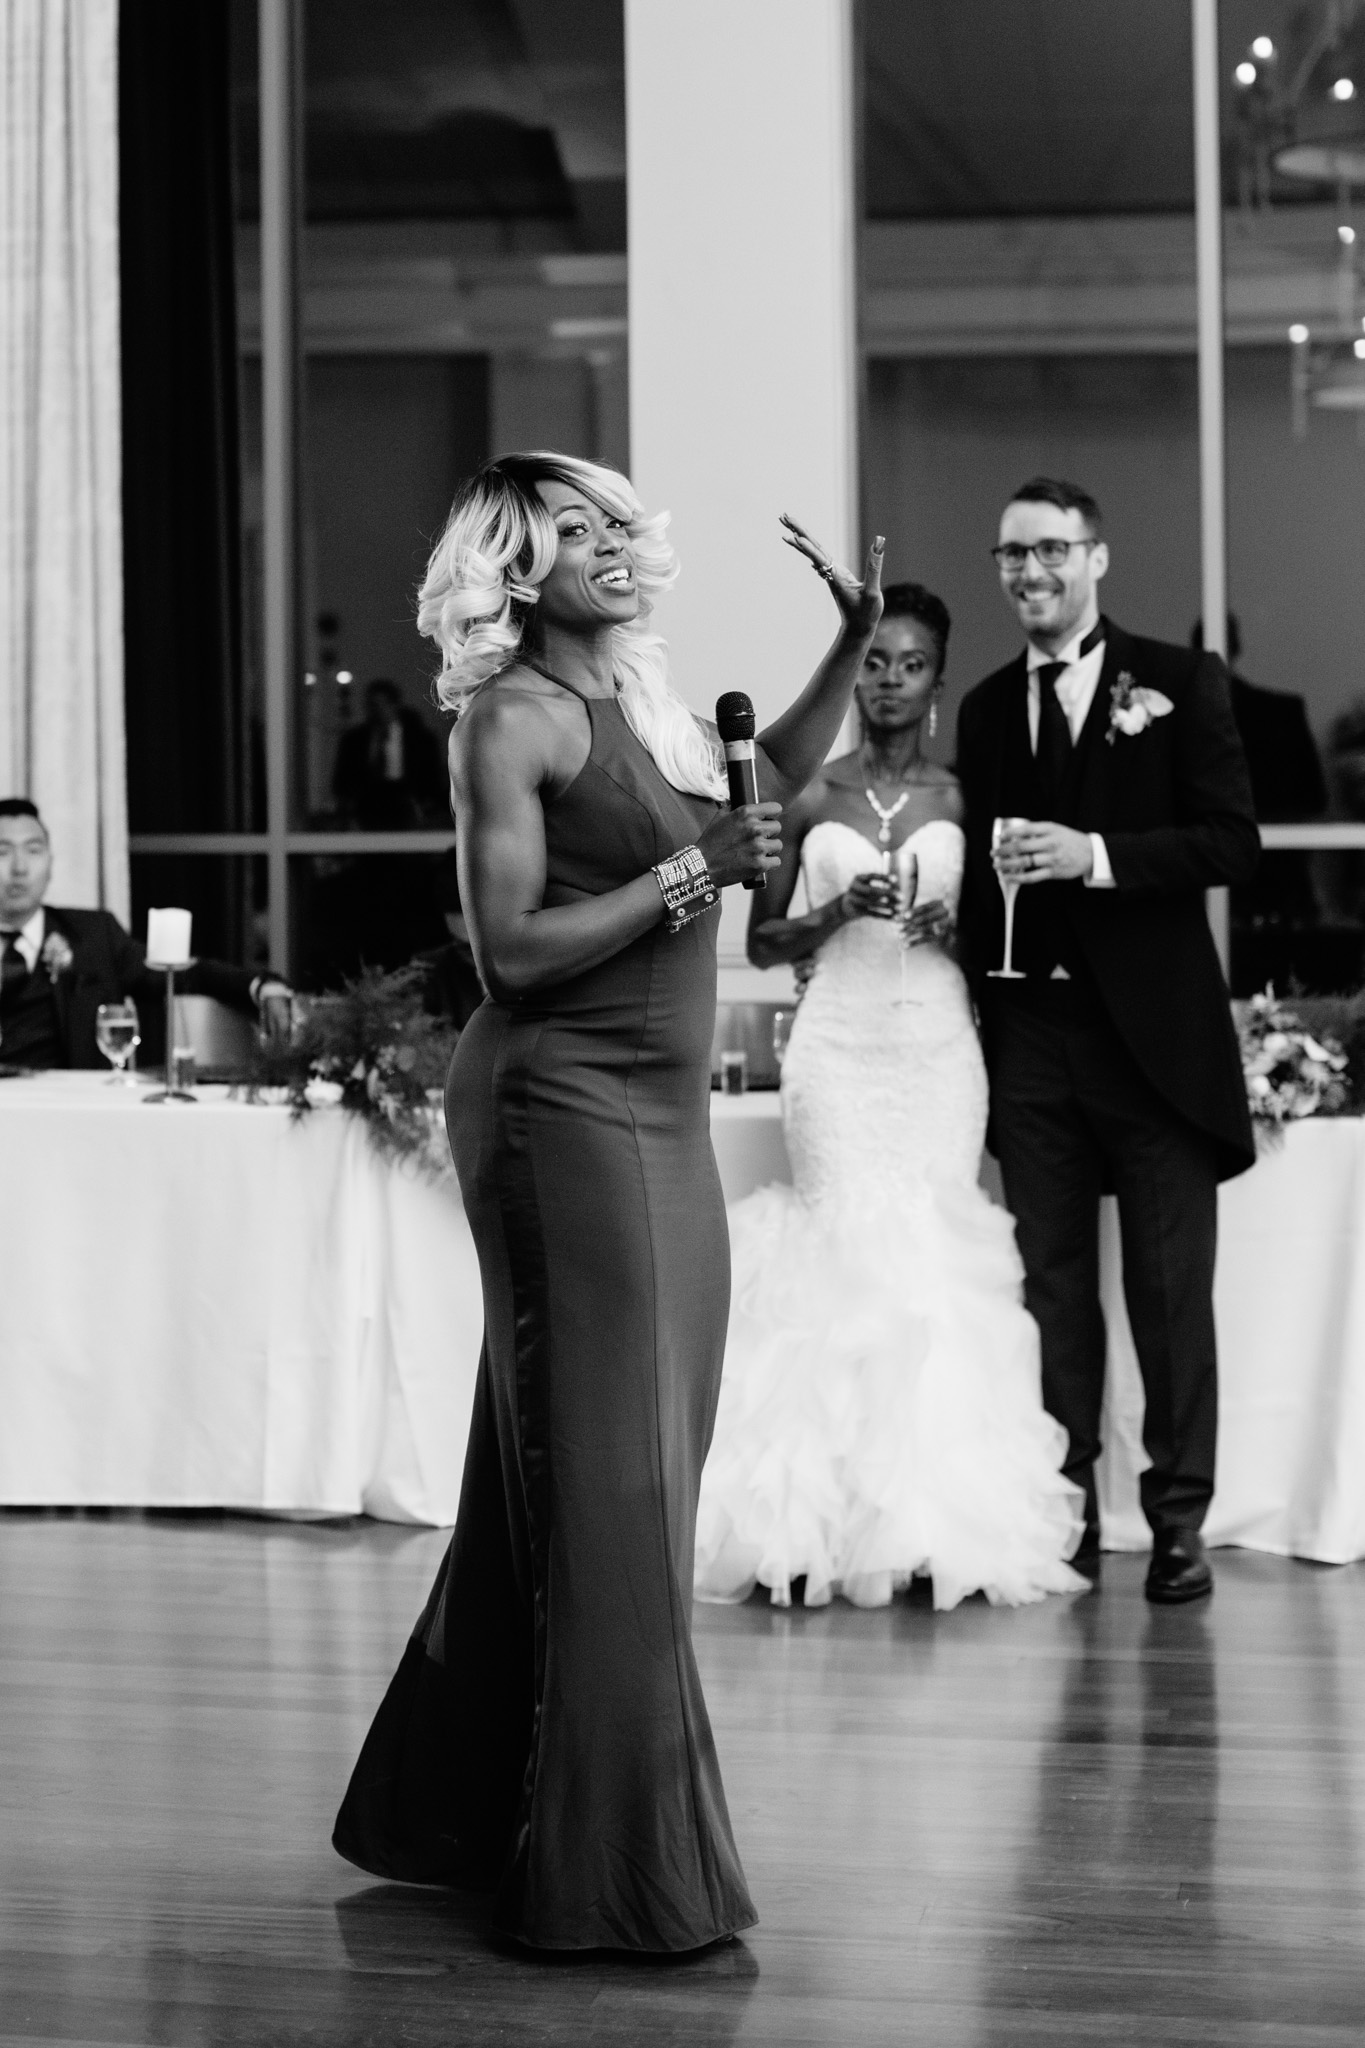 Atlanta History center wedding toast reactions. Real wedding emotion captured by Rebecca Cerasani